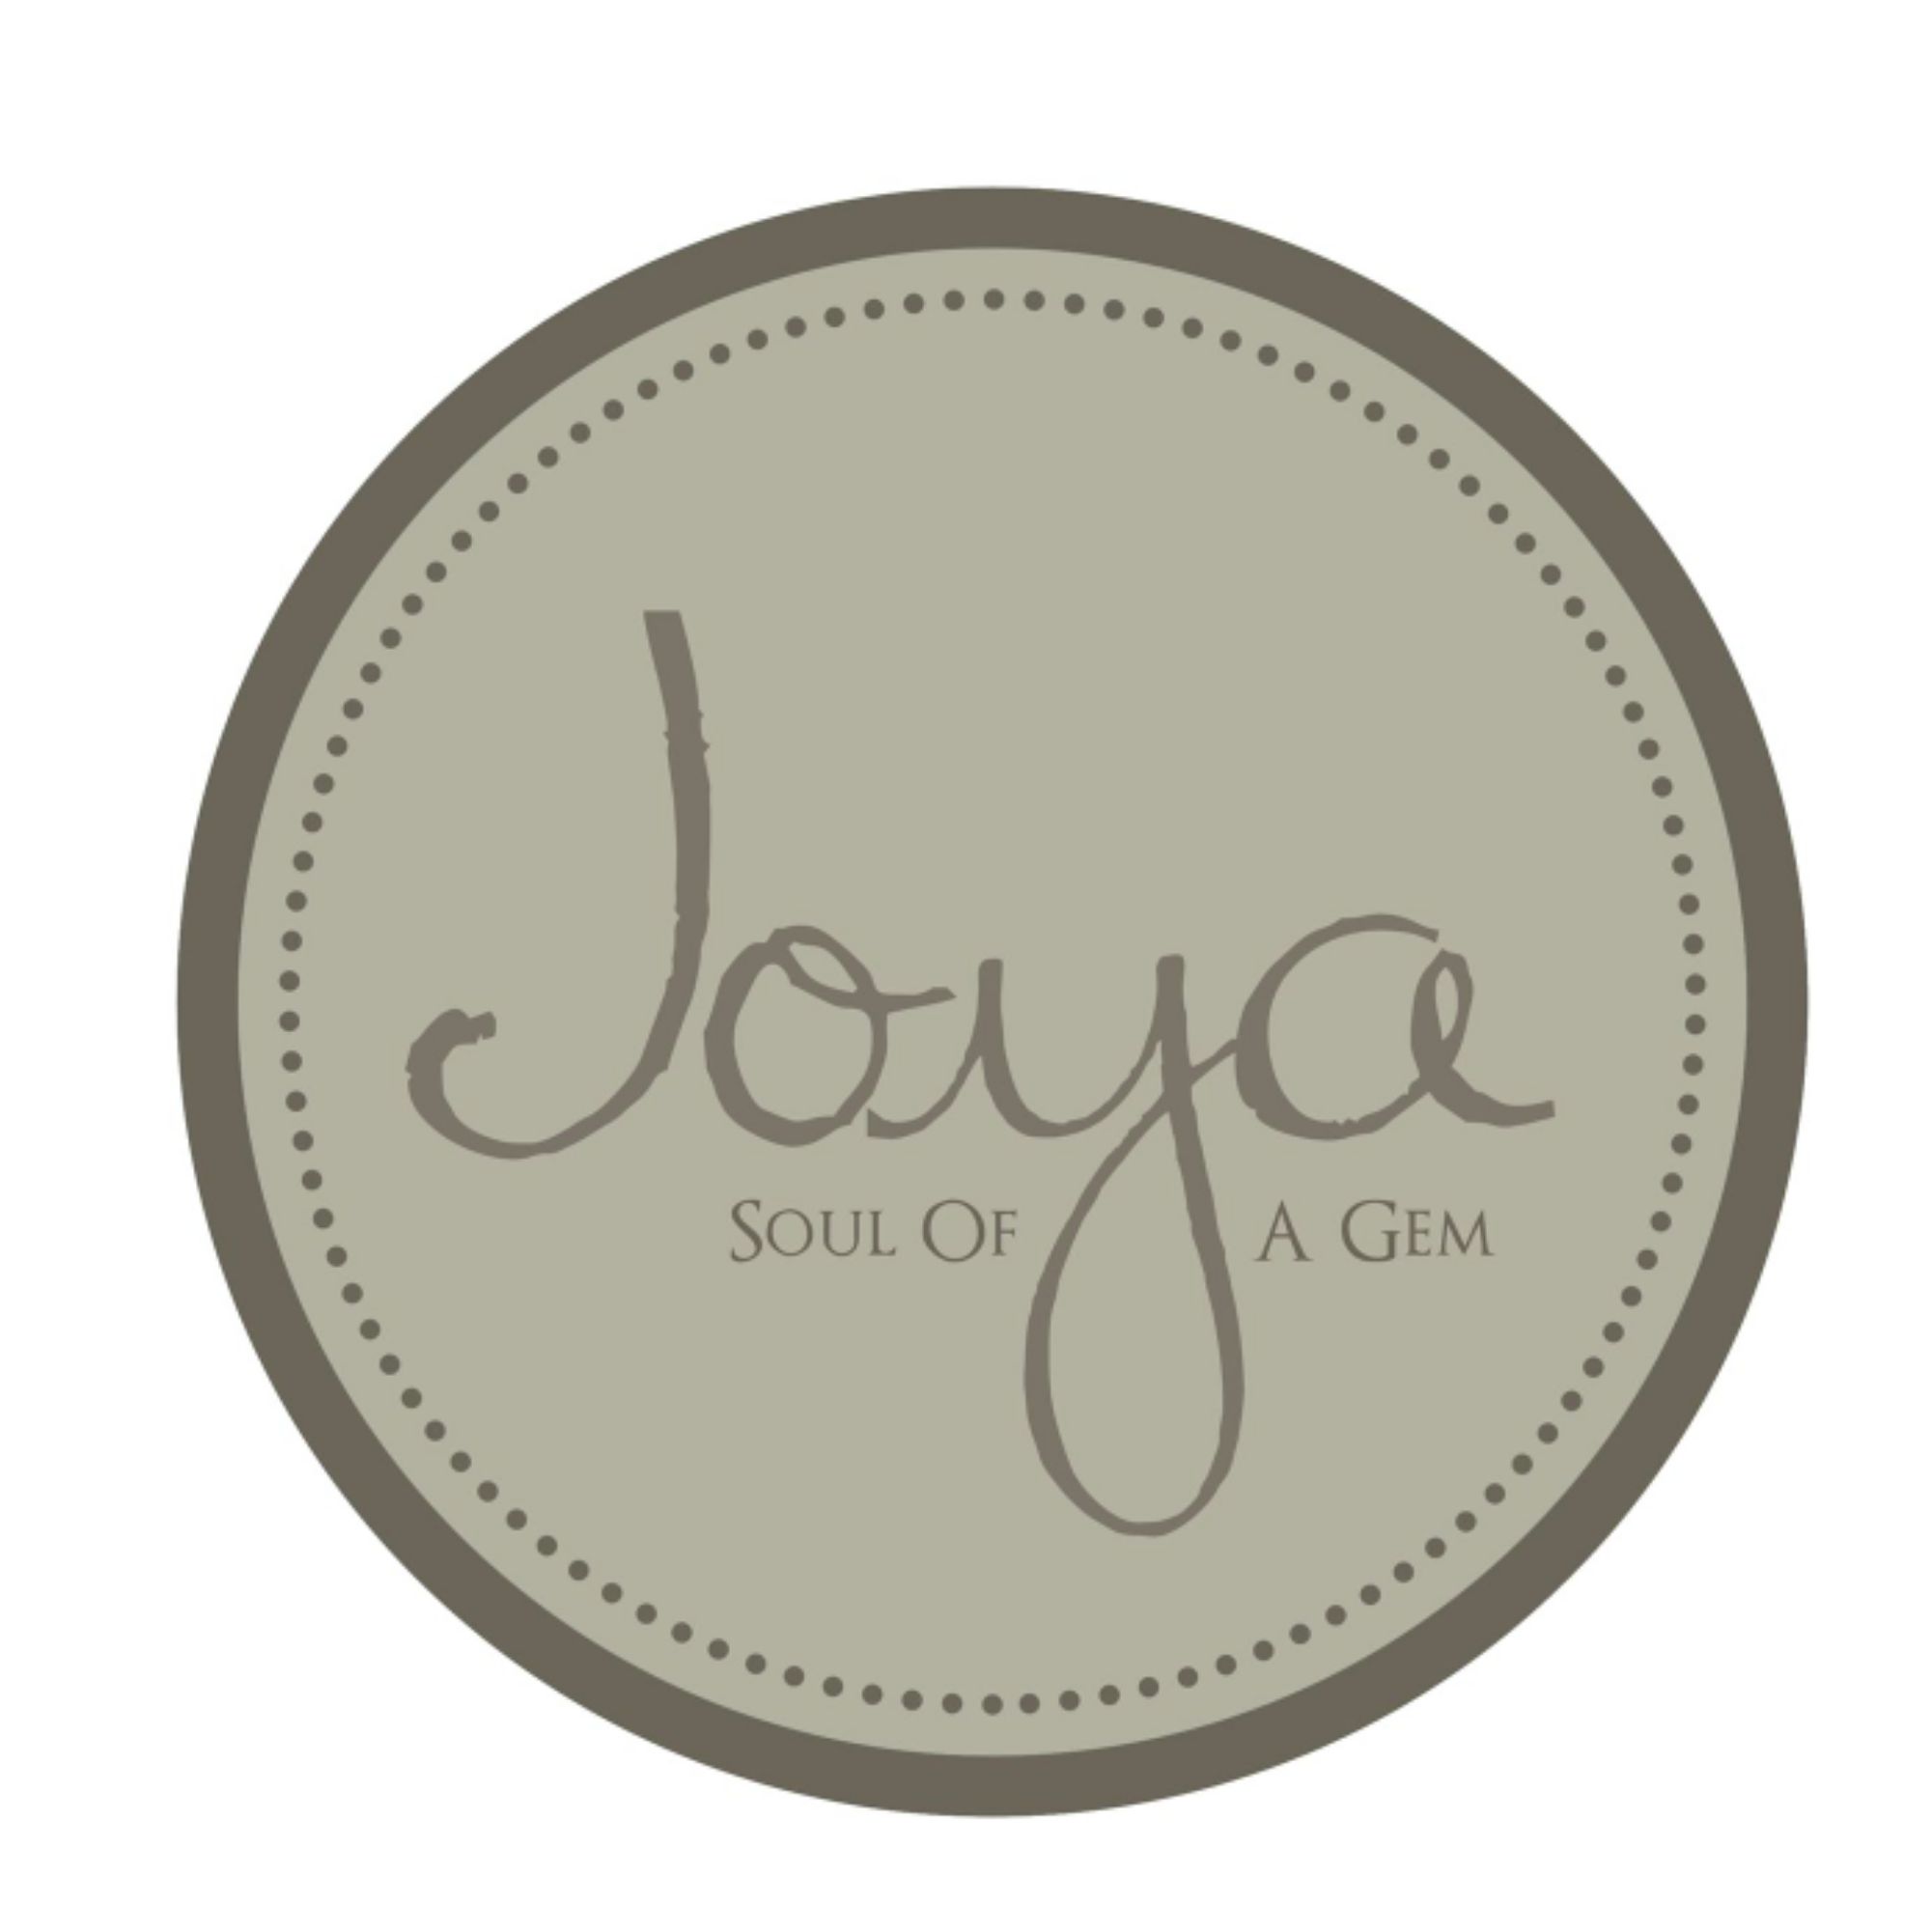 Produk Joya Soul of A Gem & Joya Wear | Shopee Indonesia